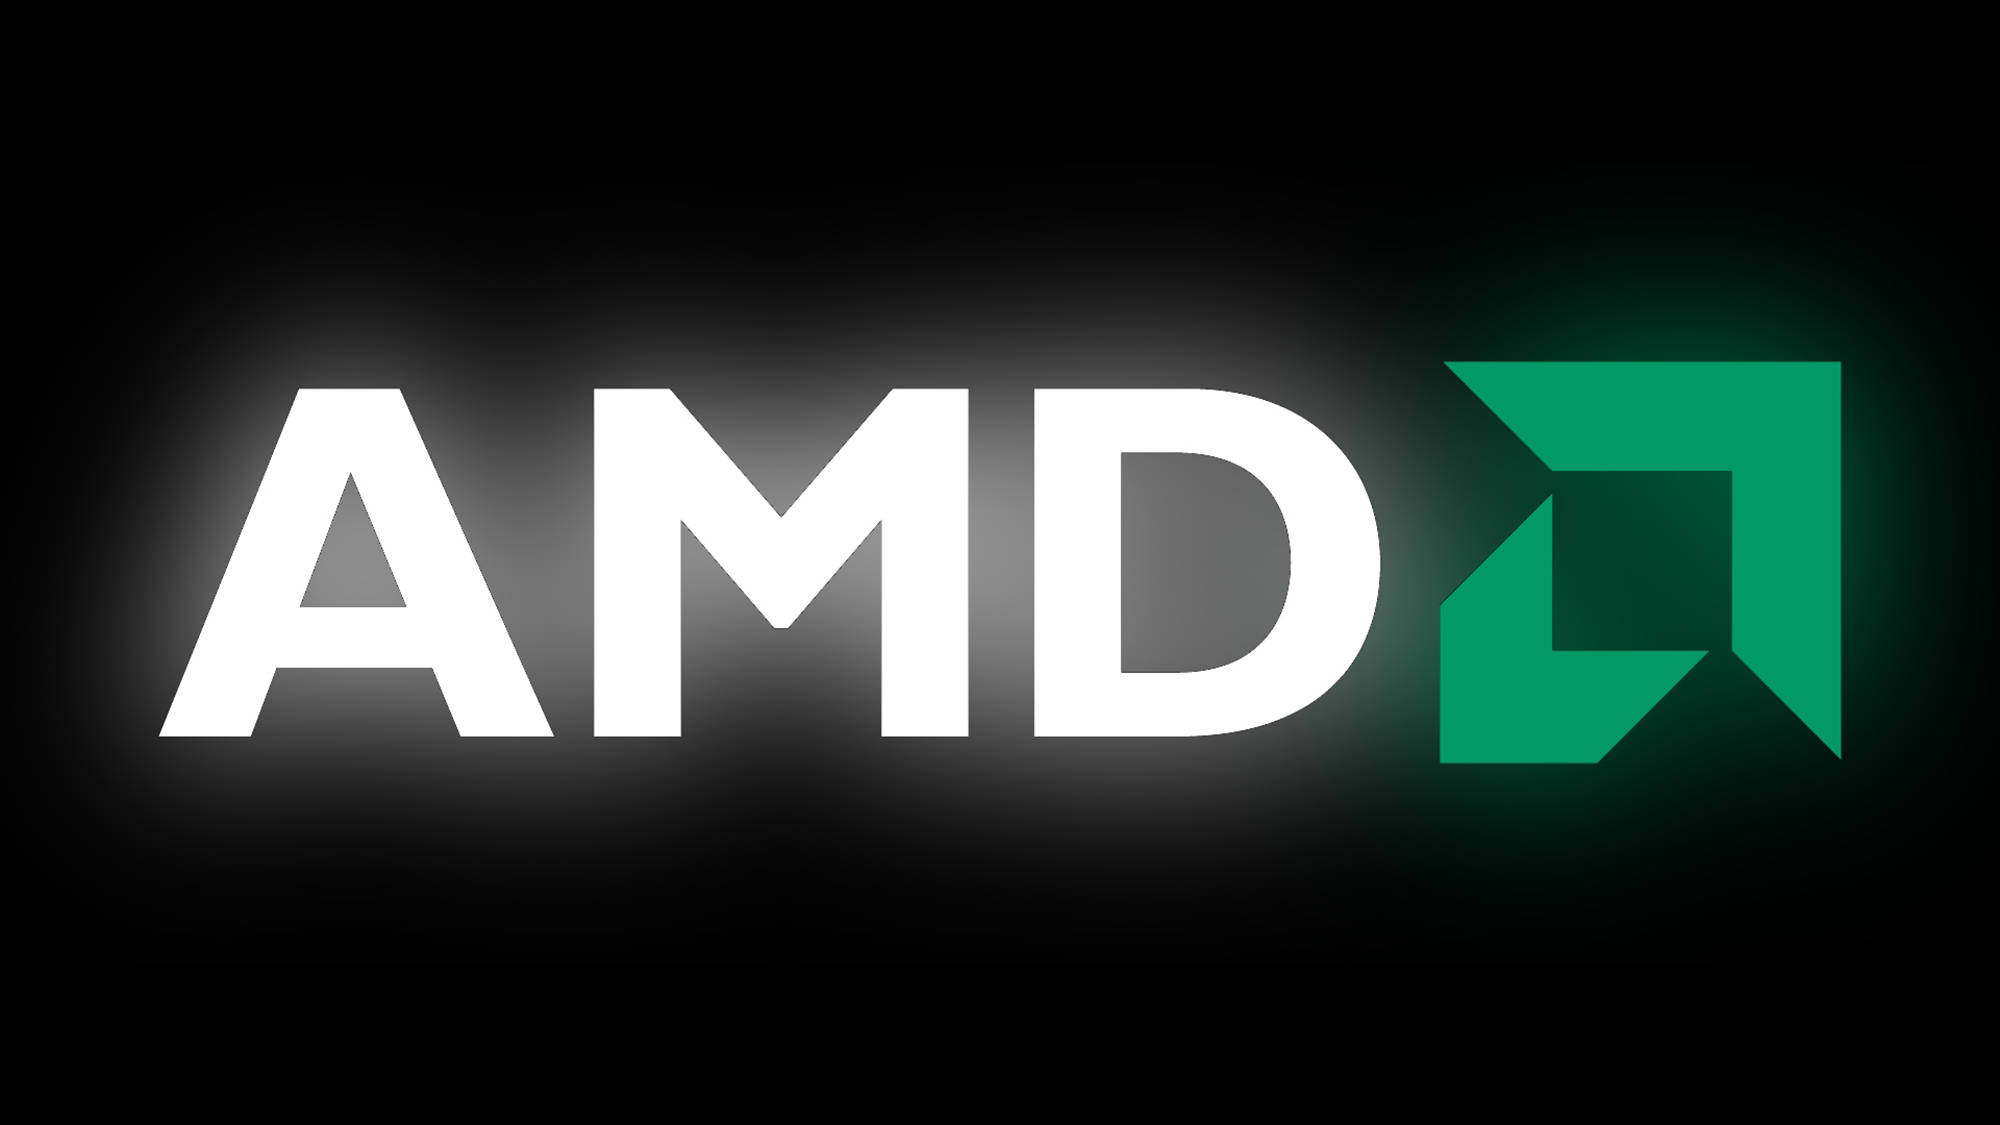 Download Glowing Amd Logo Wallpaper